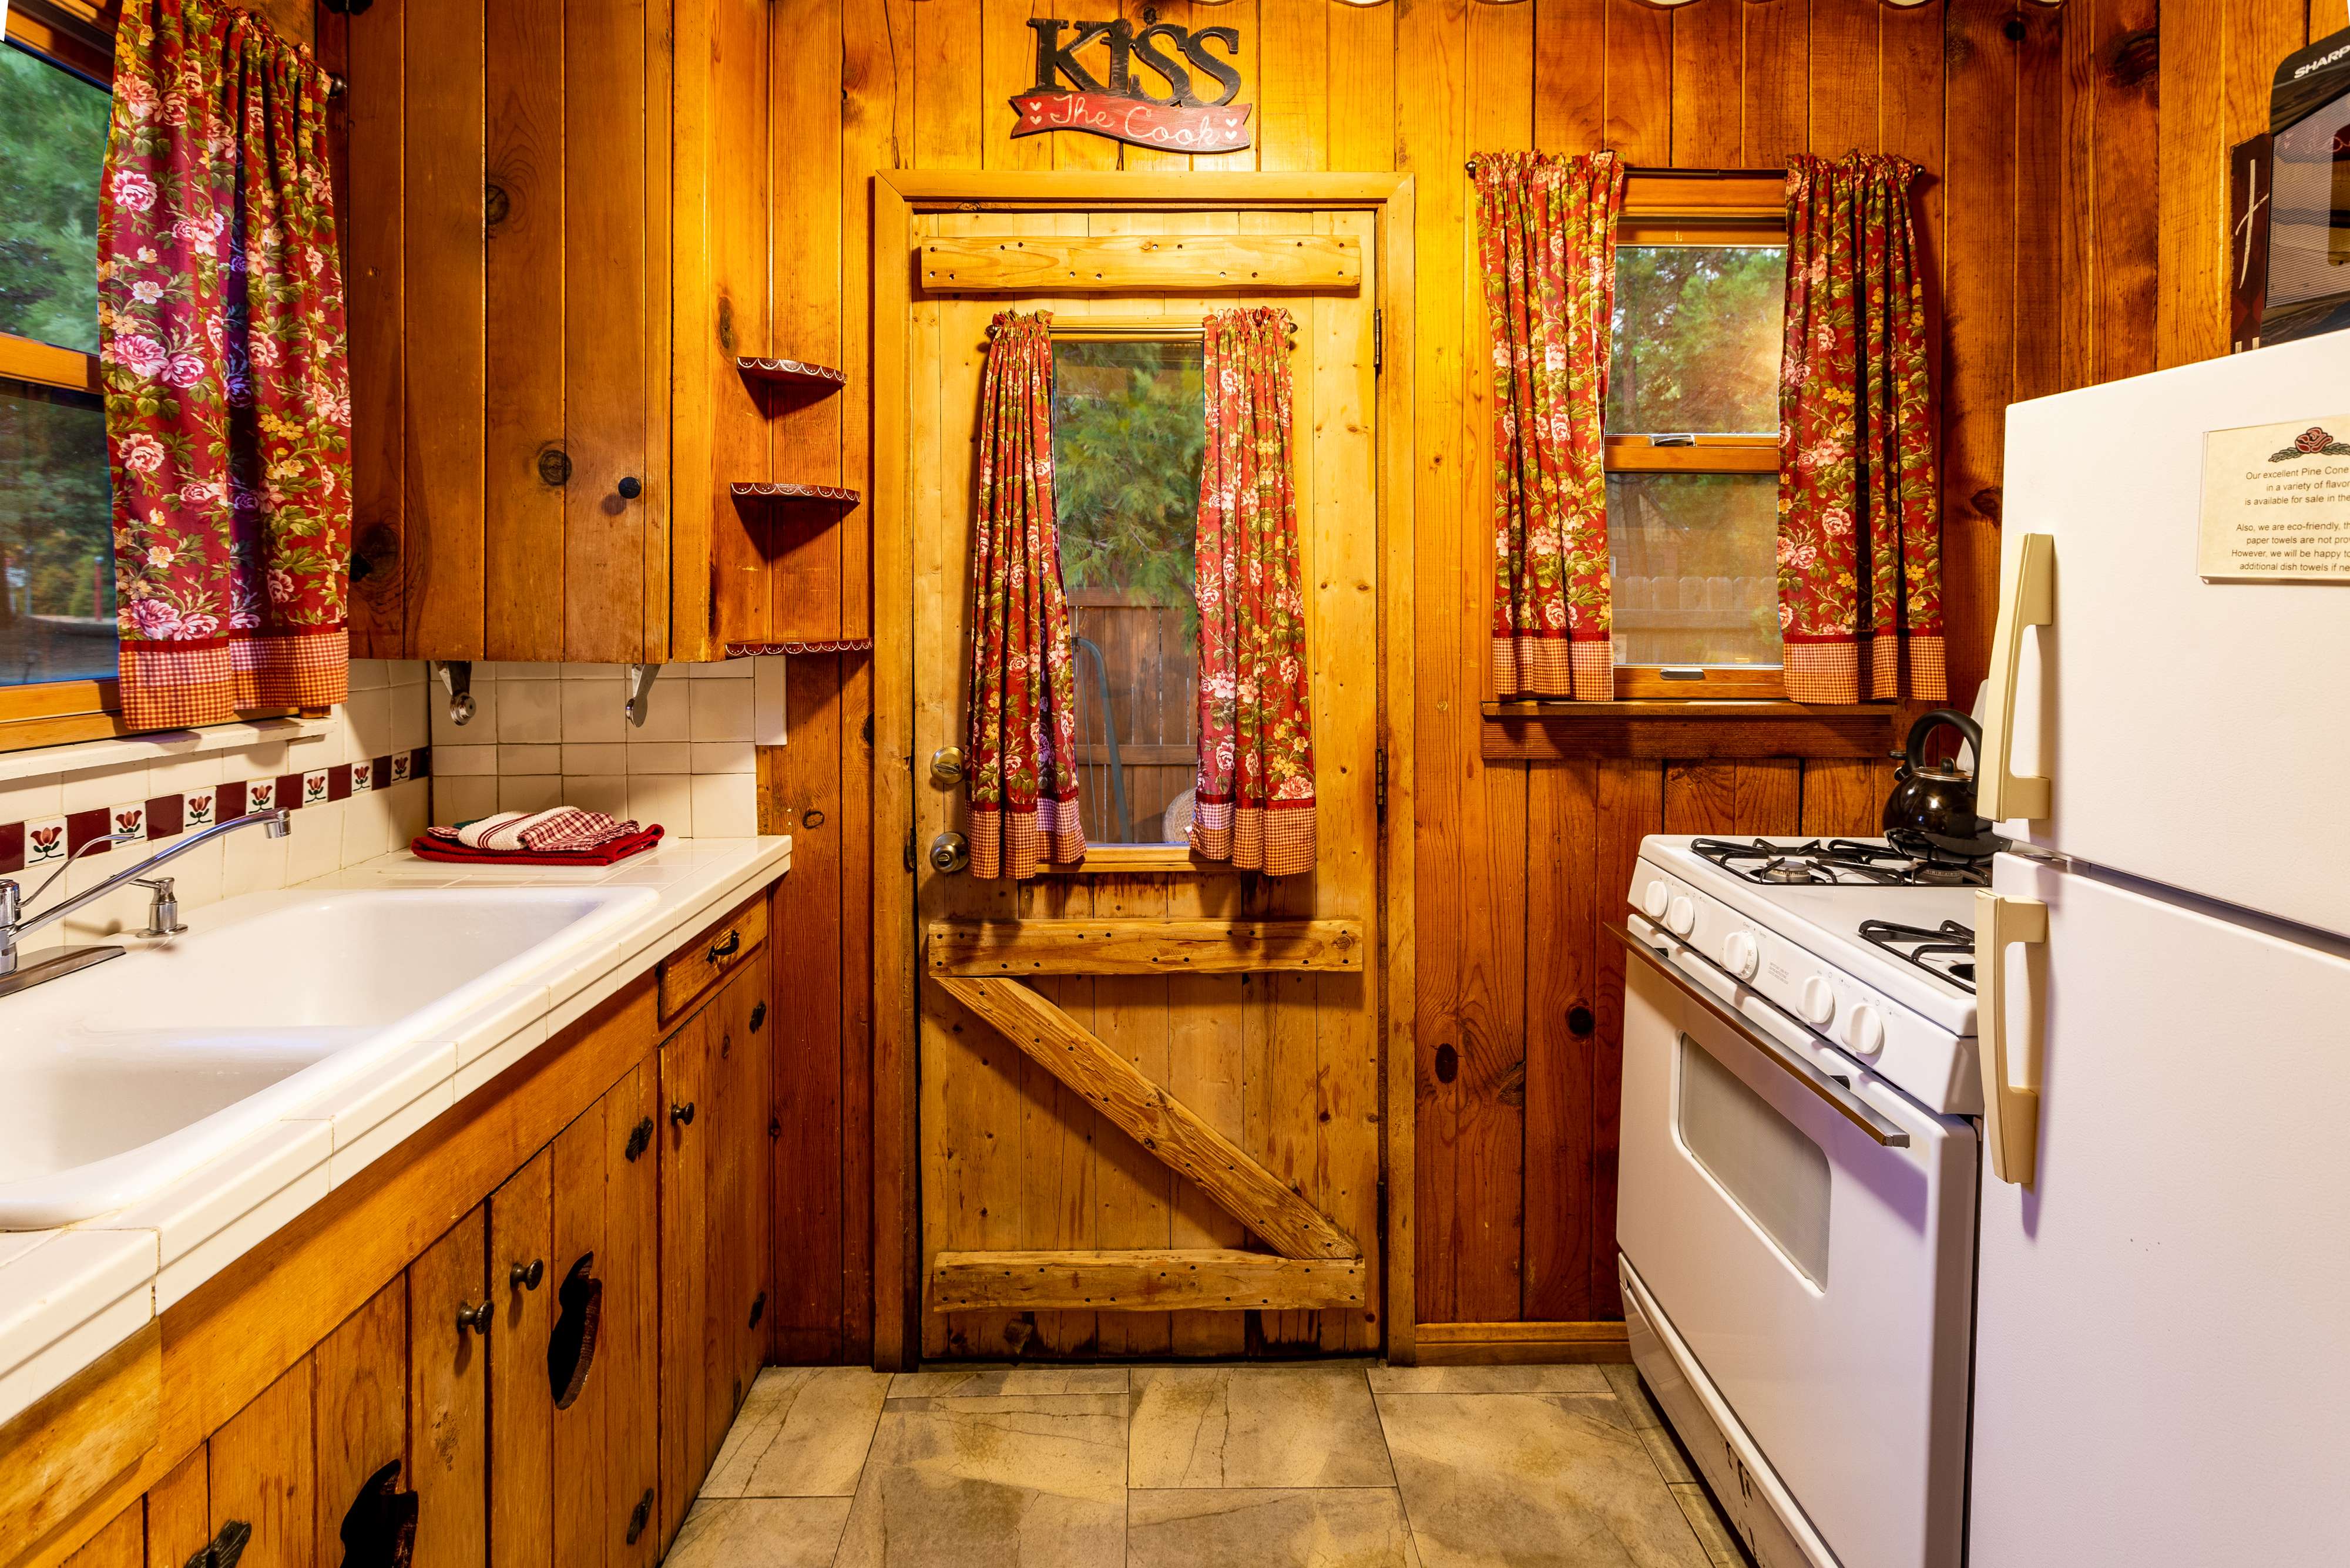 Rustic Romance kitchen.jpg